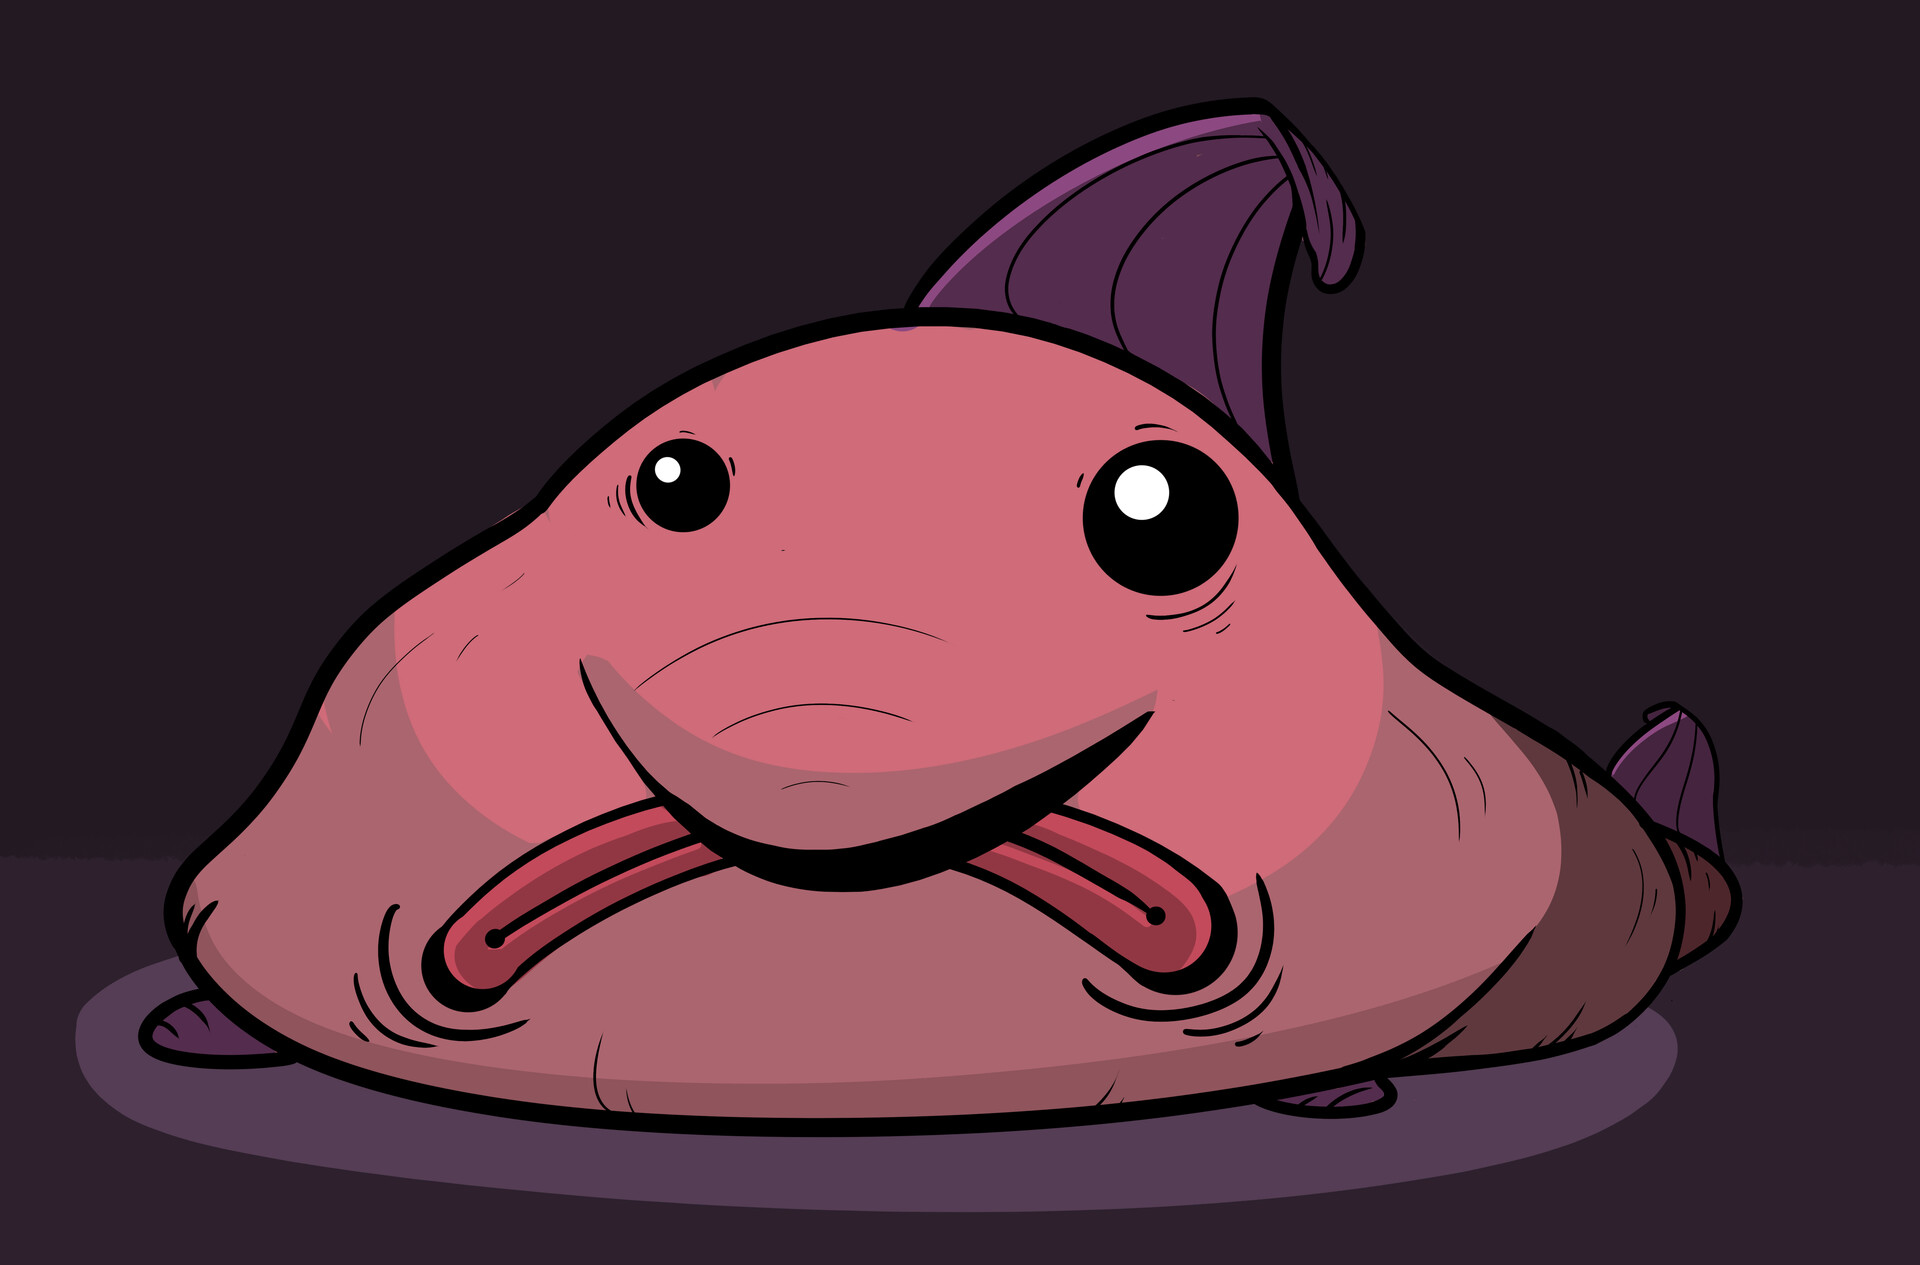 A Blobfish named Kuro